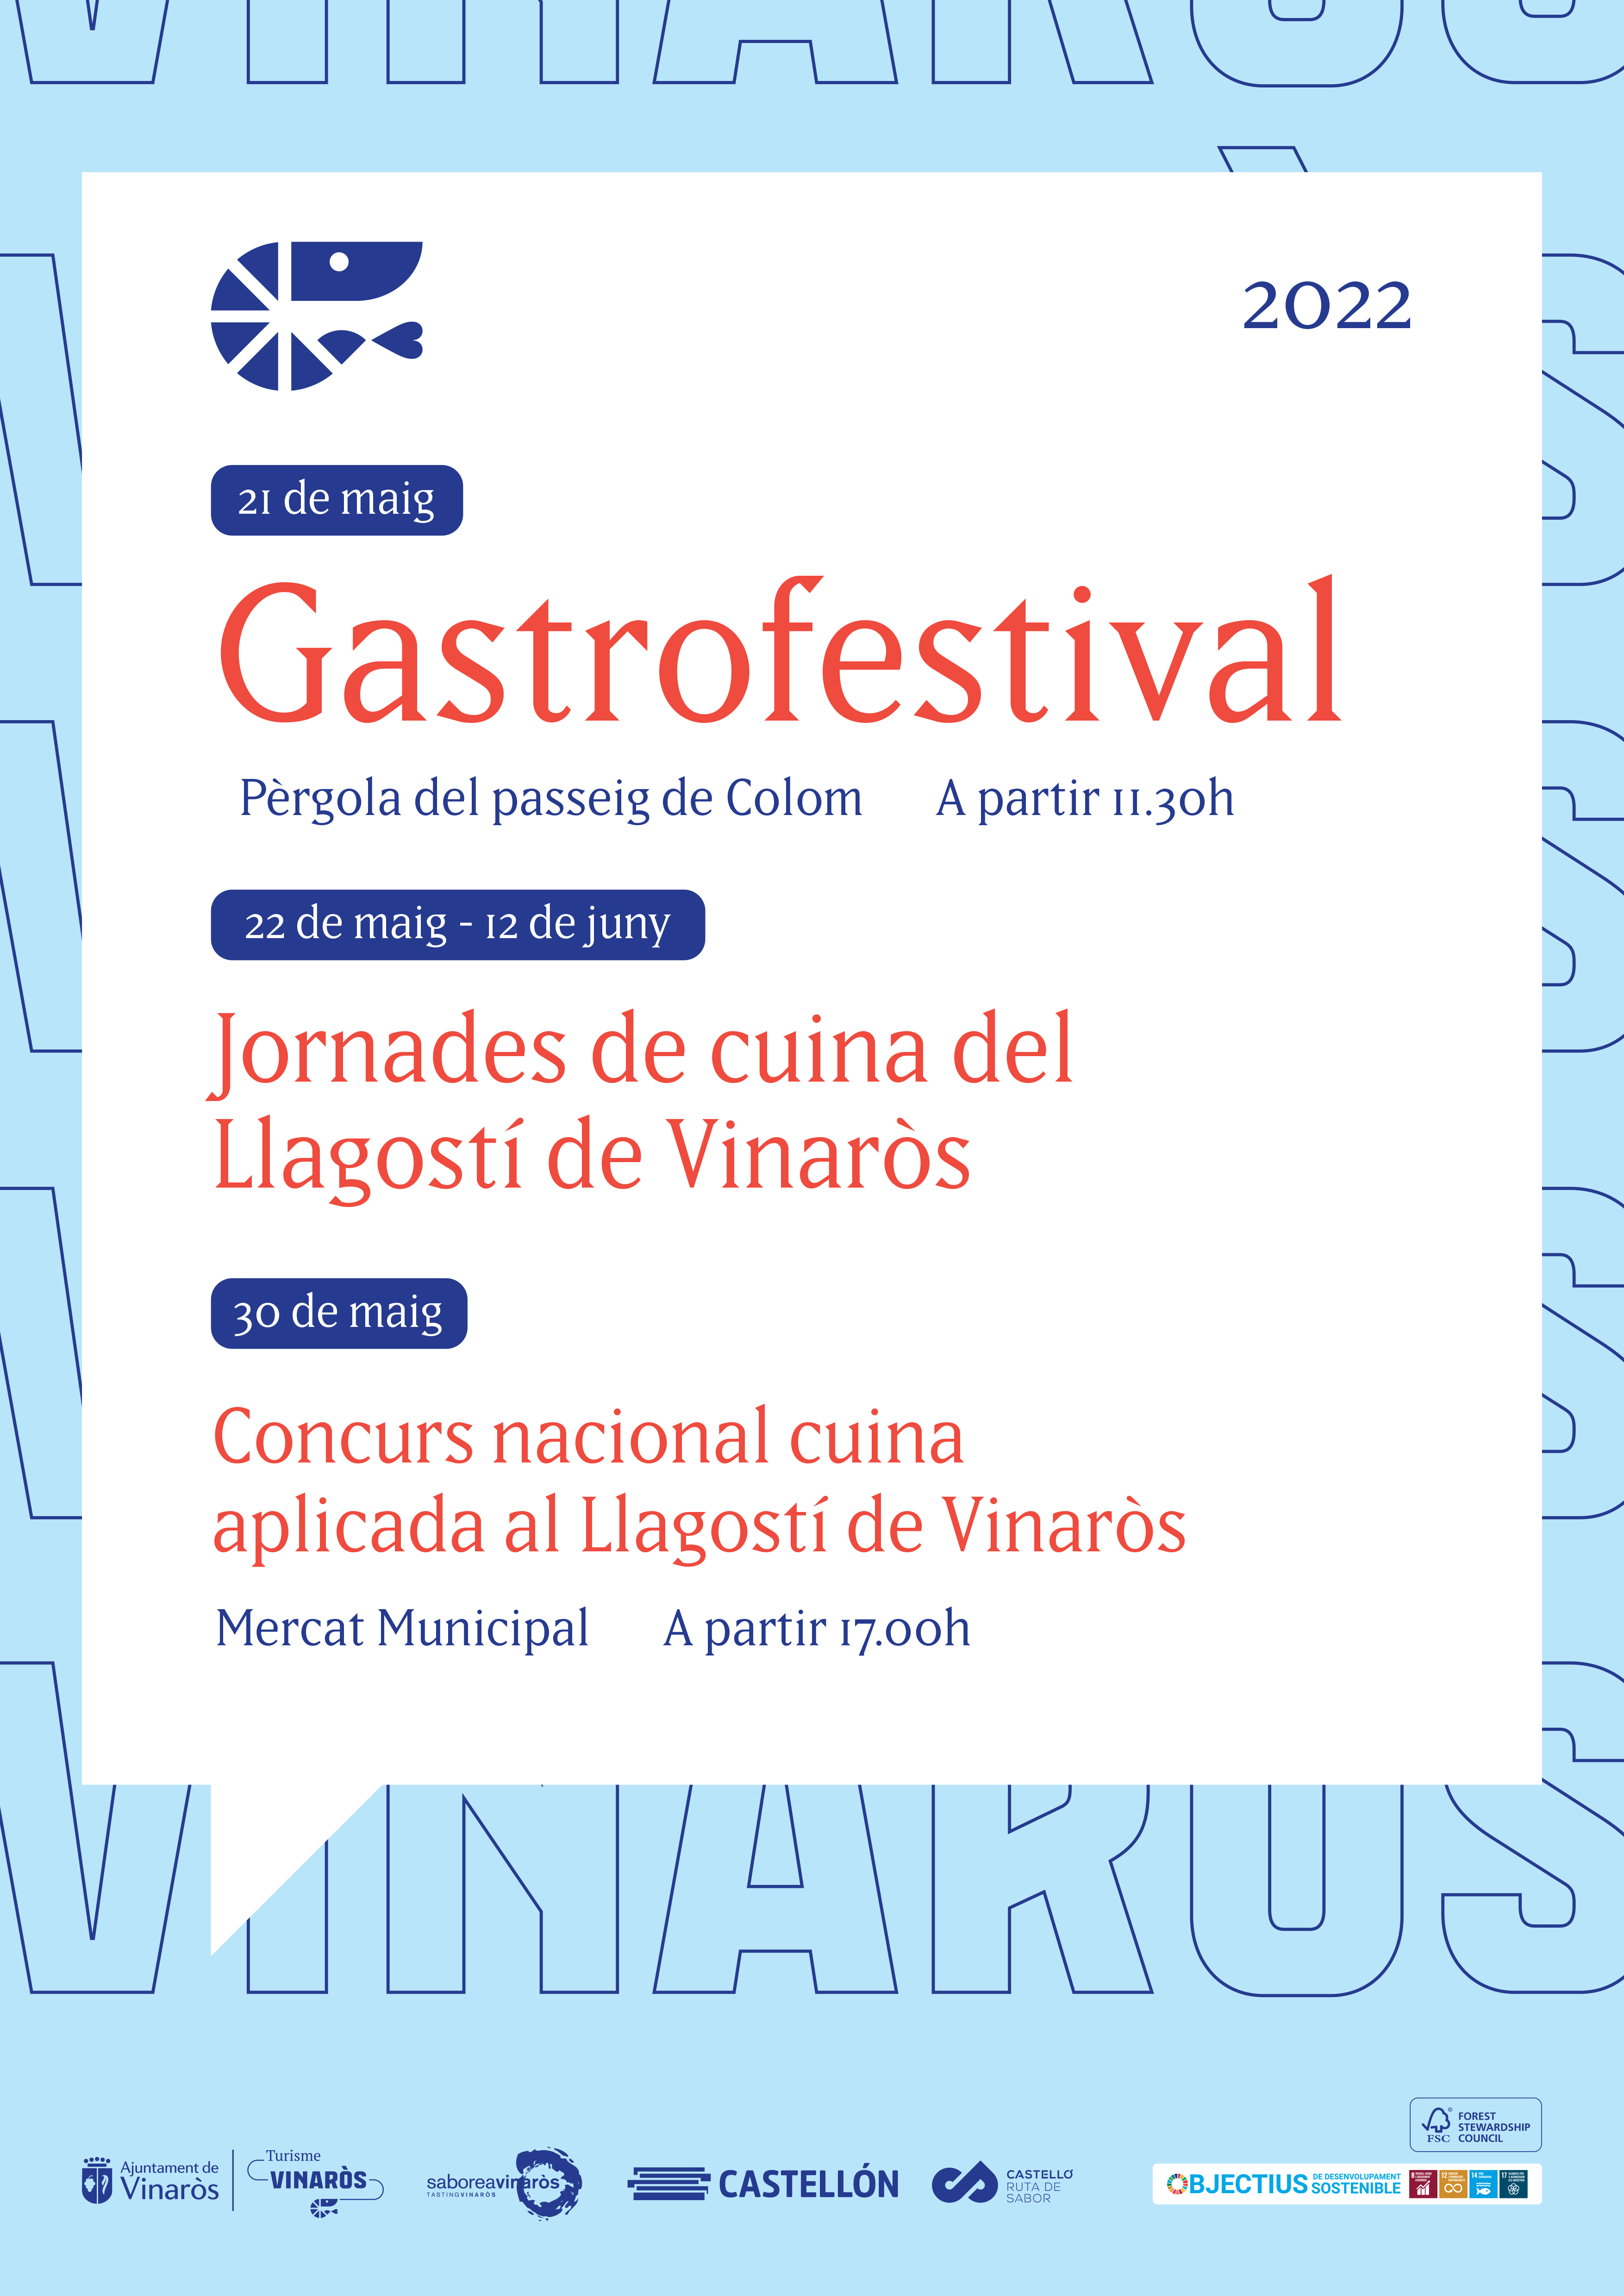 Gastrofestival del Langostino de Vinaròs 2022